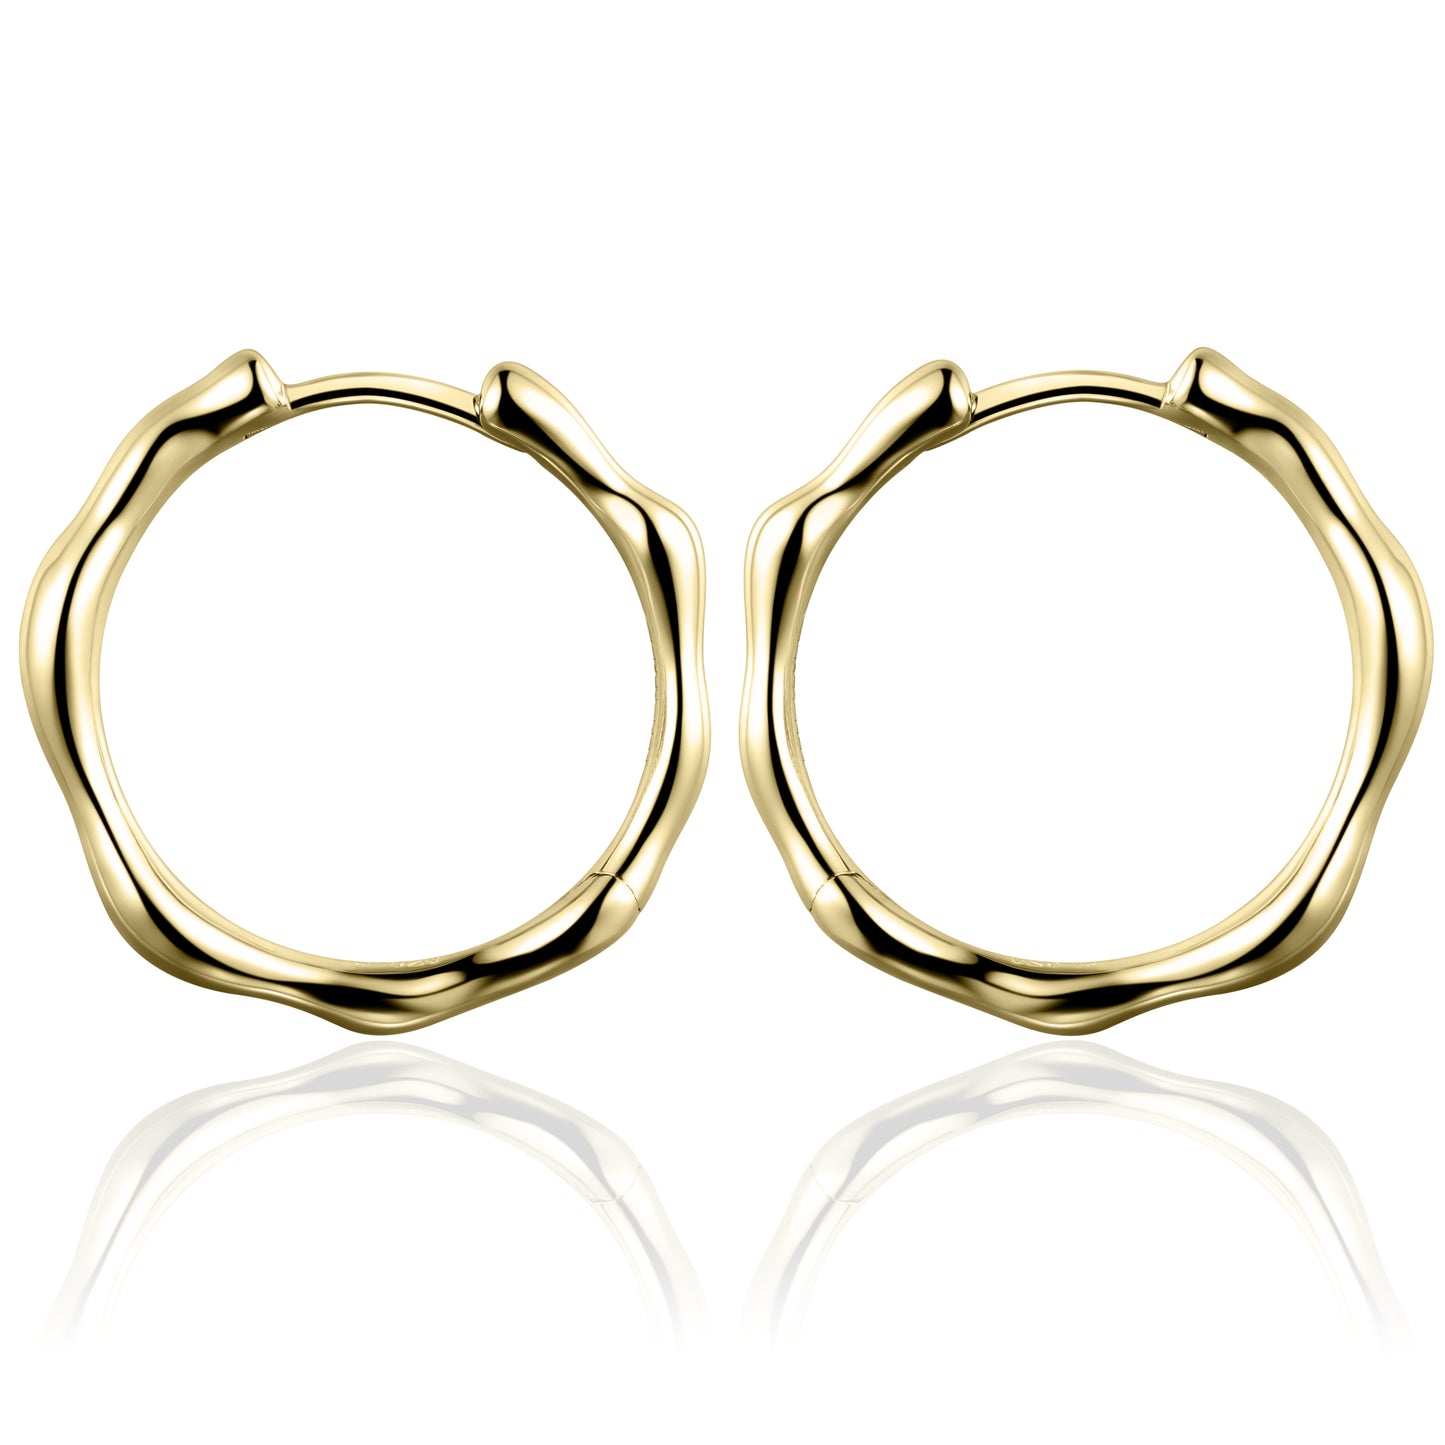 ORGANIC 24mm Hoop Earrings - Gold - John Ross Jewellers